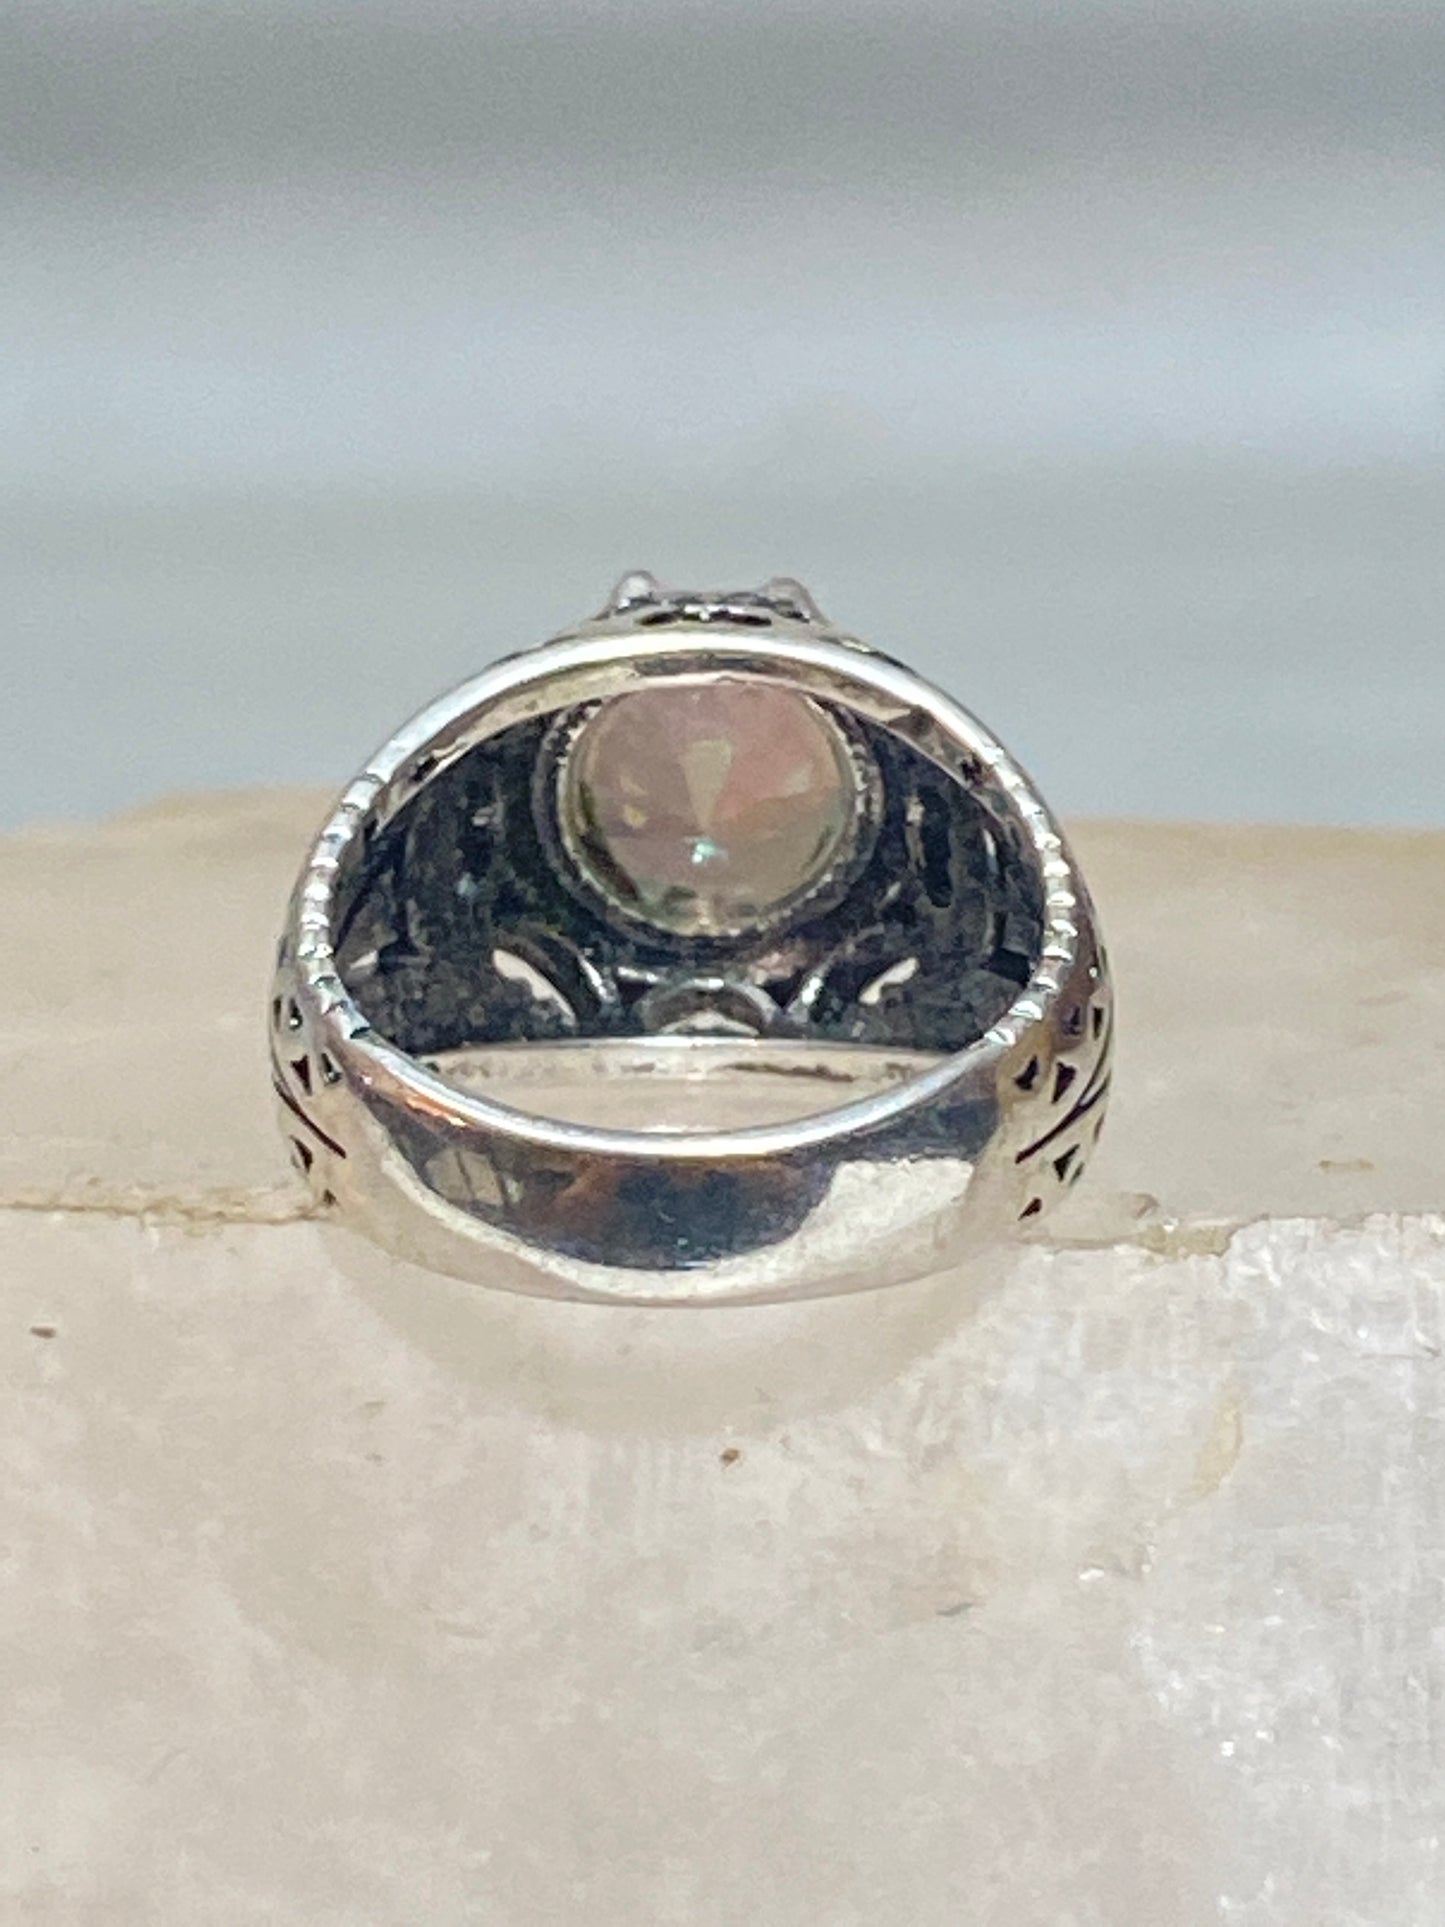 Mystic Topaz ring filigree art deco style sterling silver women